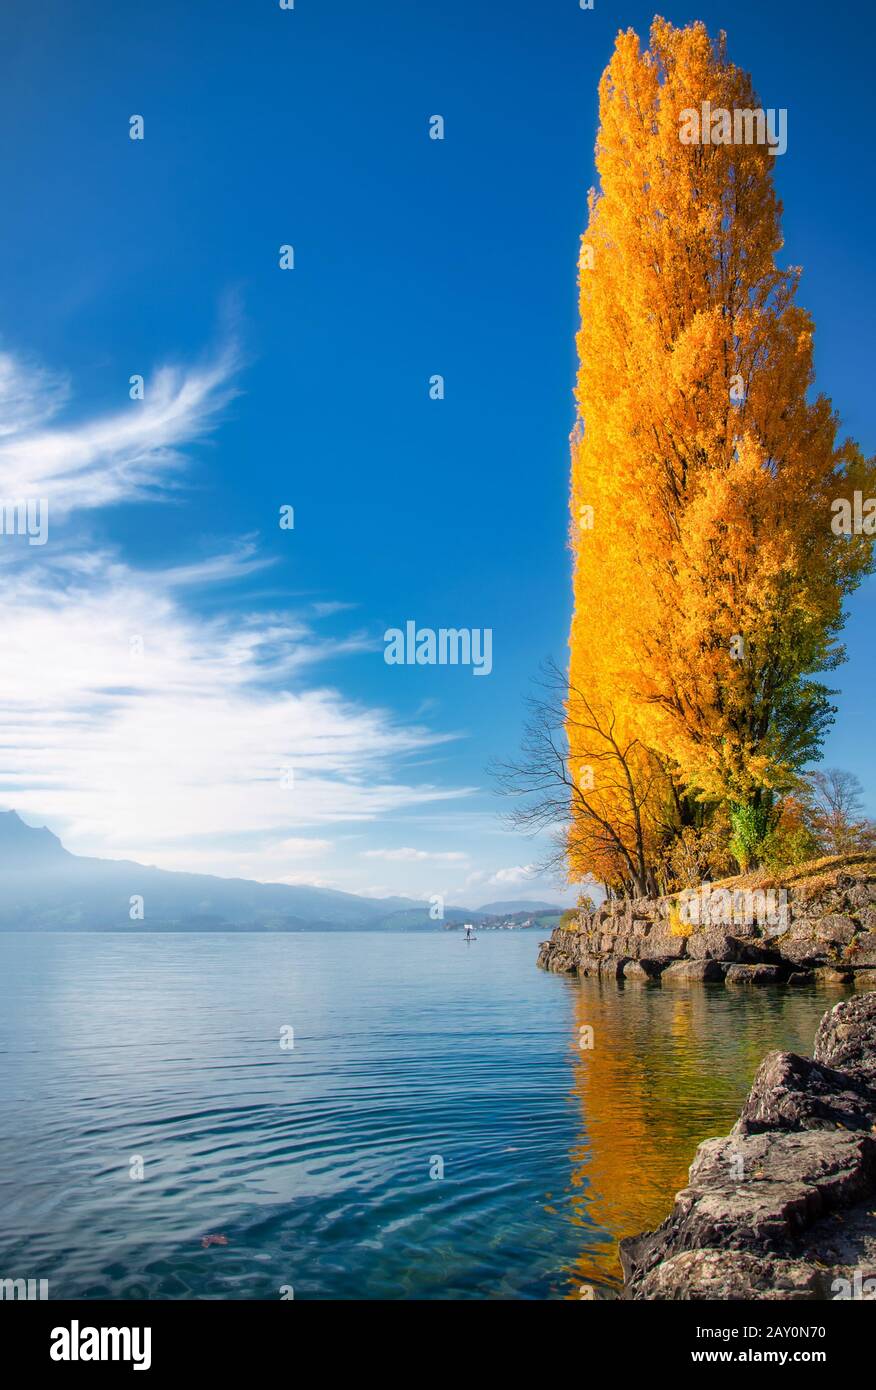 Autumn tree along the lakeshore, Switzerland Stock Photo